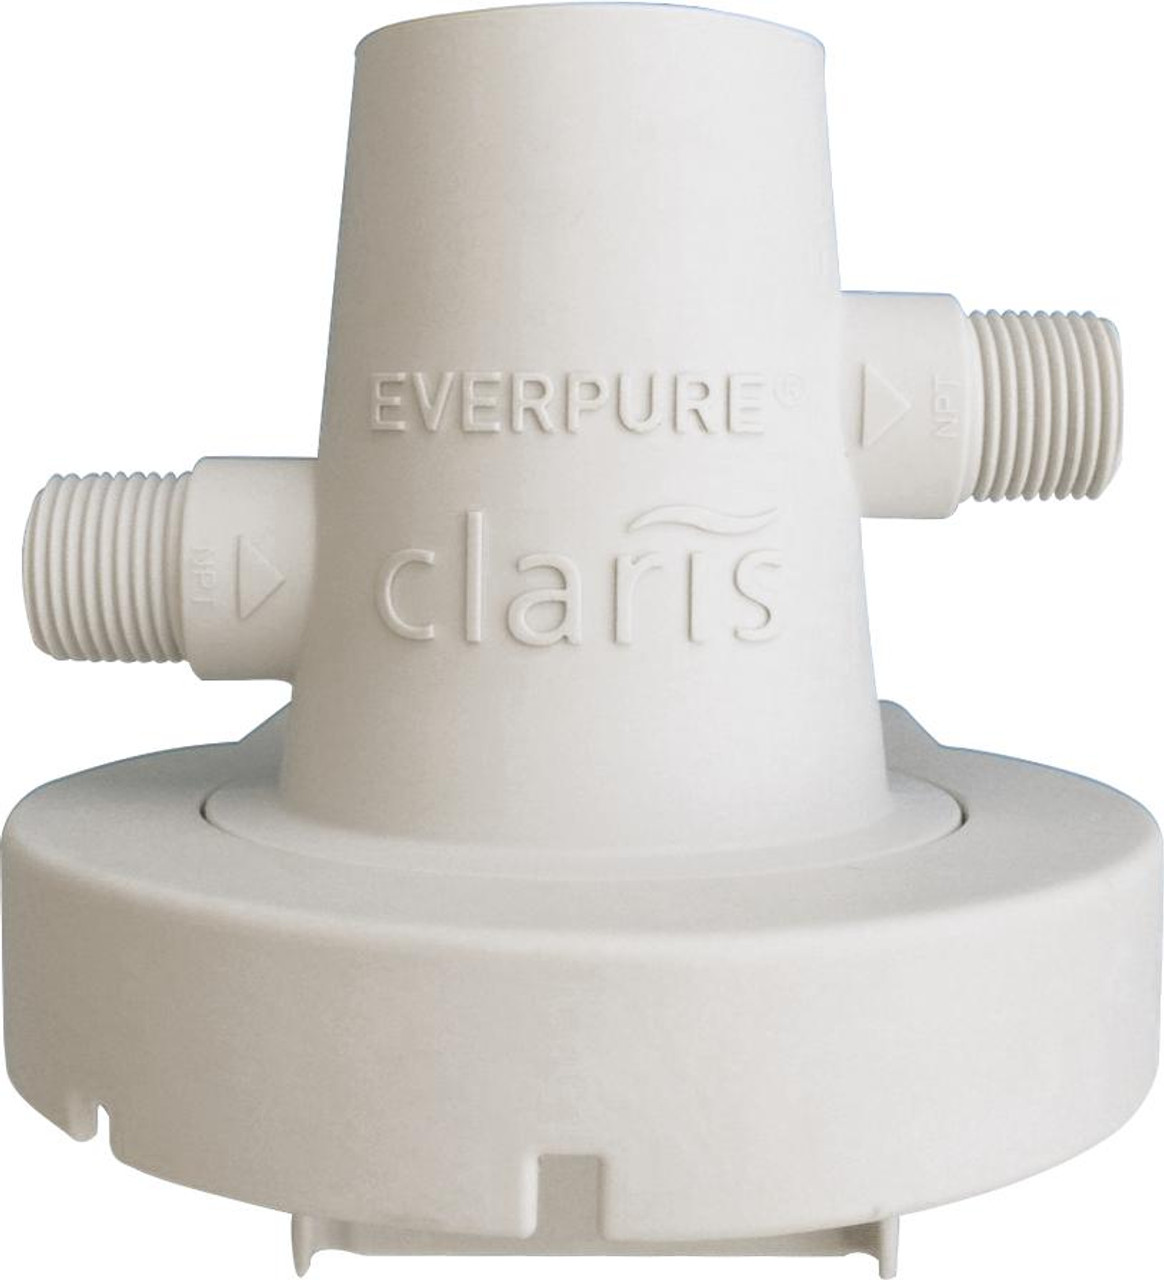 CLARIS Smart+ filter cartridge - International